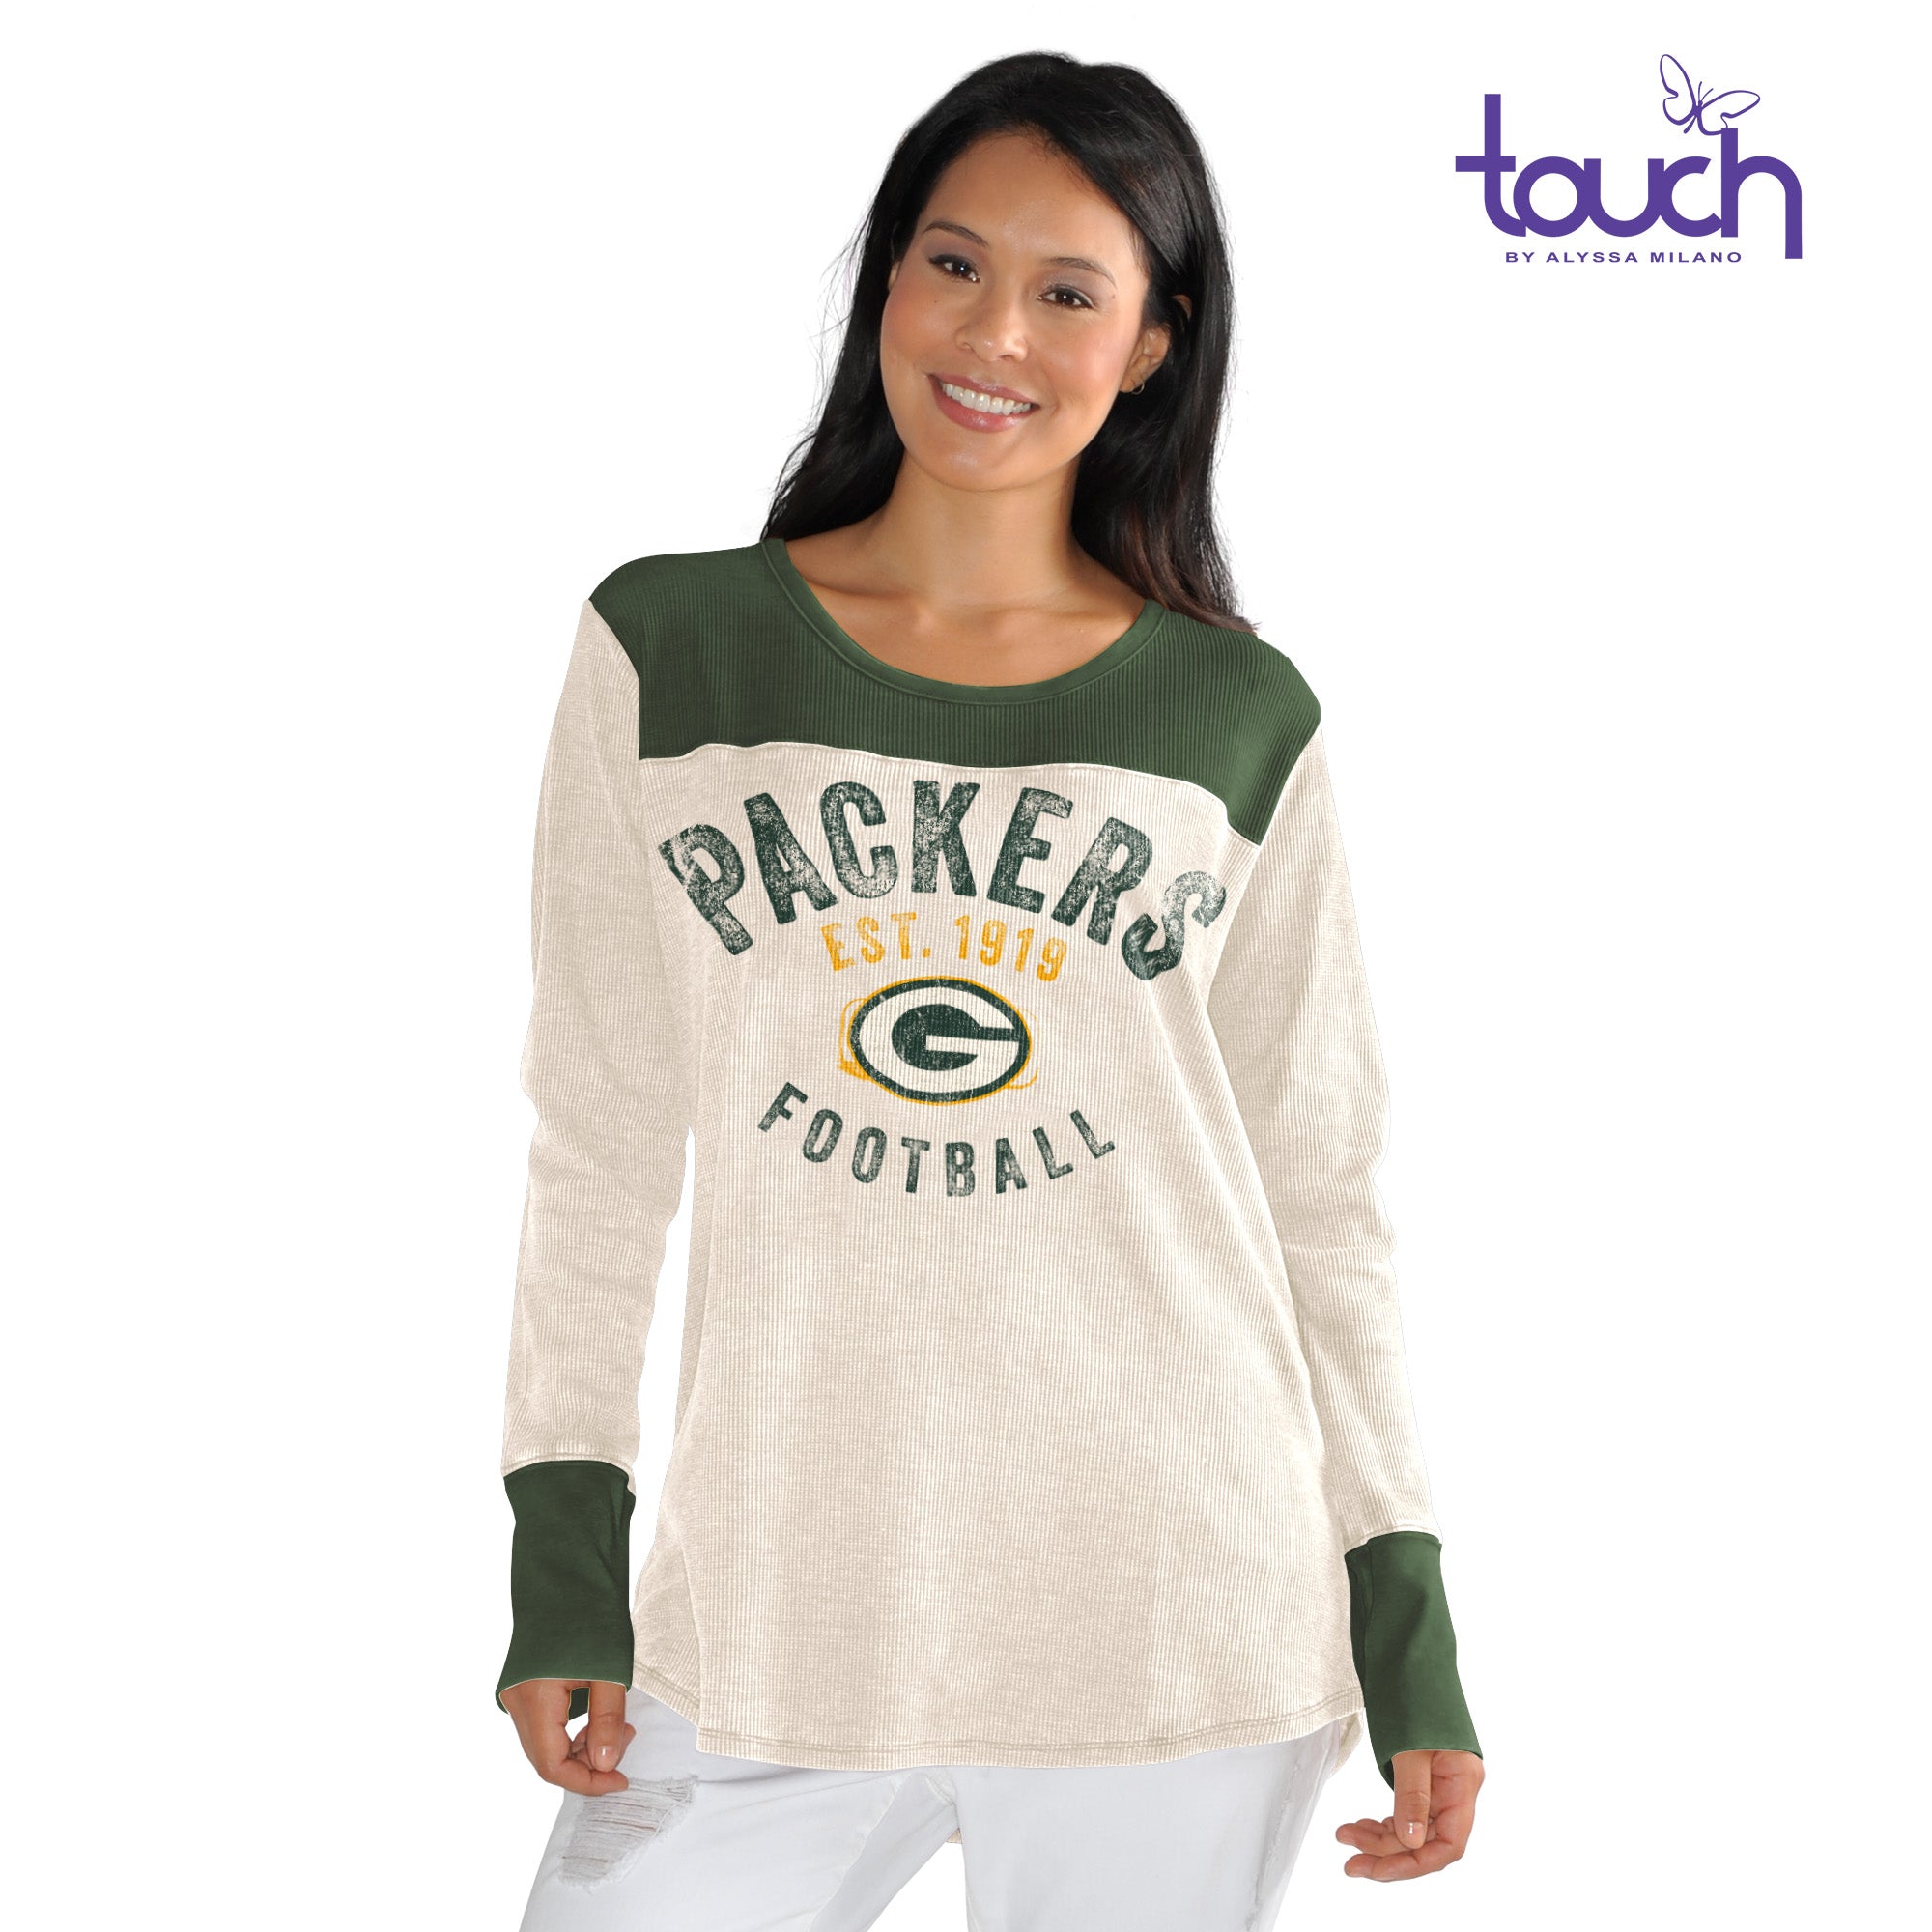 G-III Packers Womens Punt Tie-Dye Thermal T-Shirt Medium Green